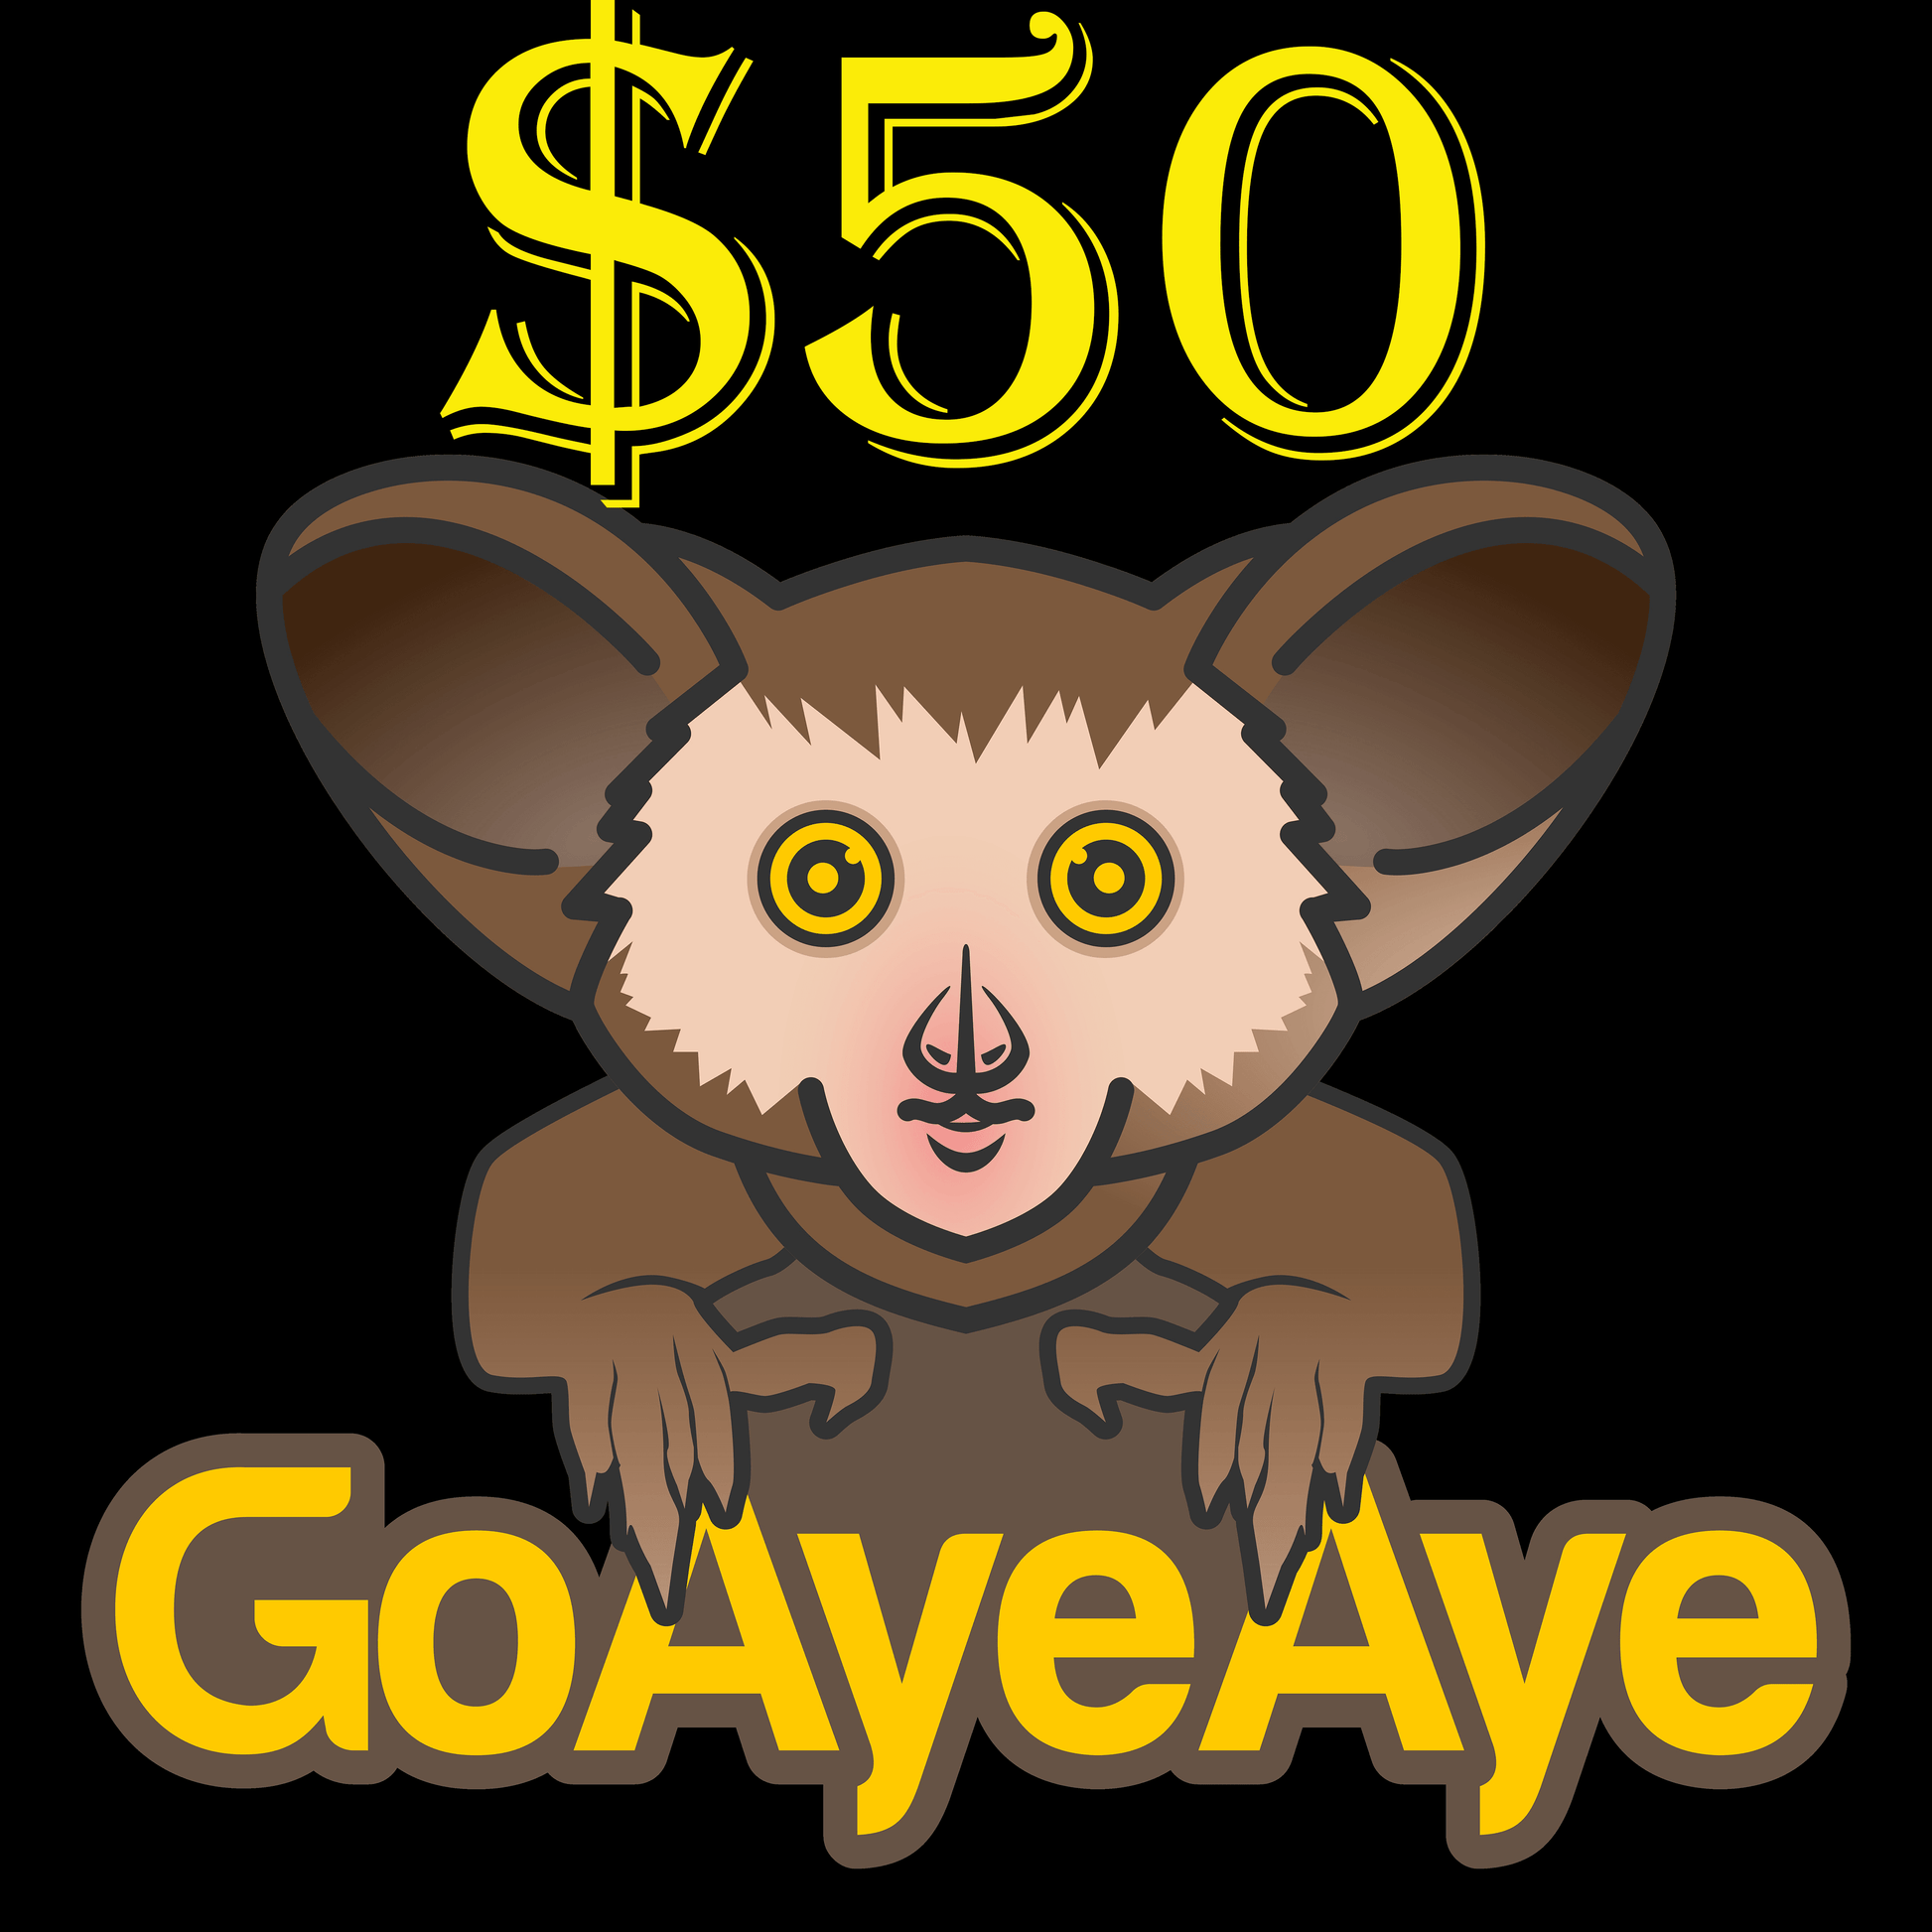 GoAyeAye Store Gift Card - GoAyeAye